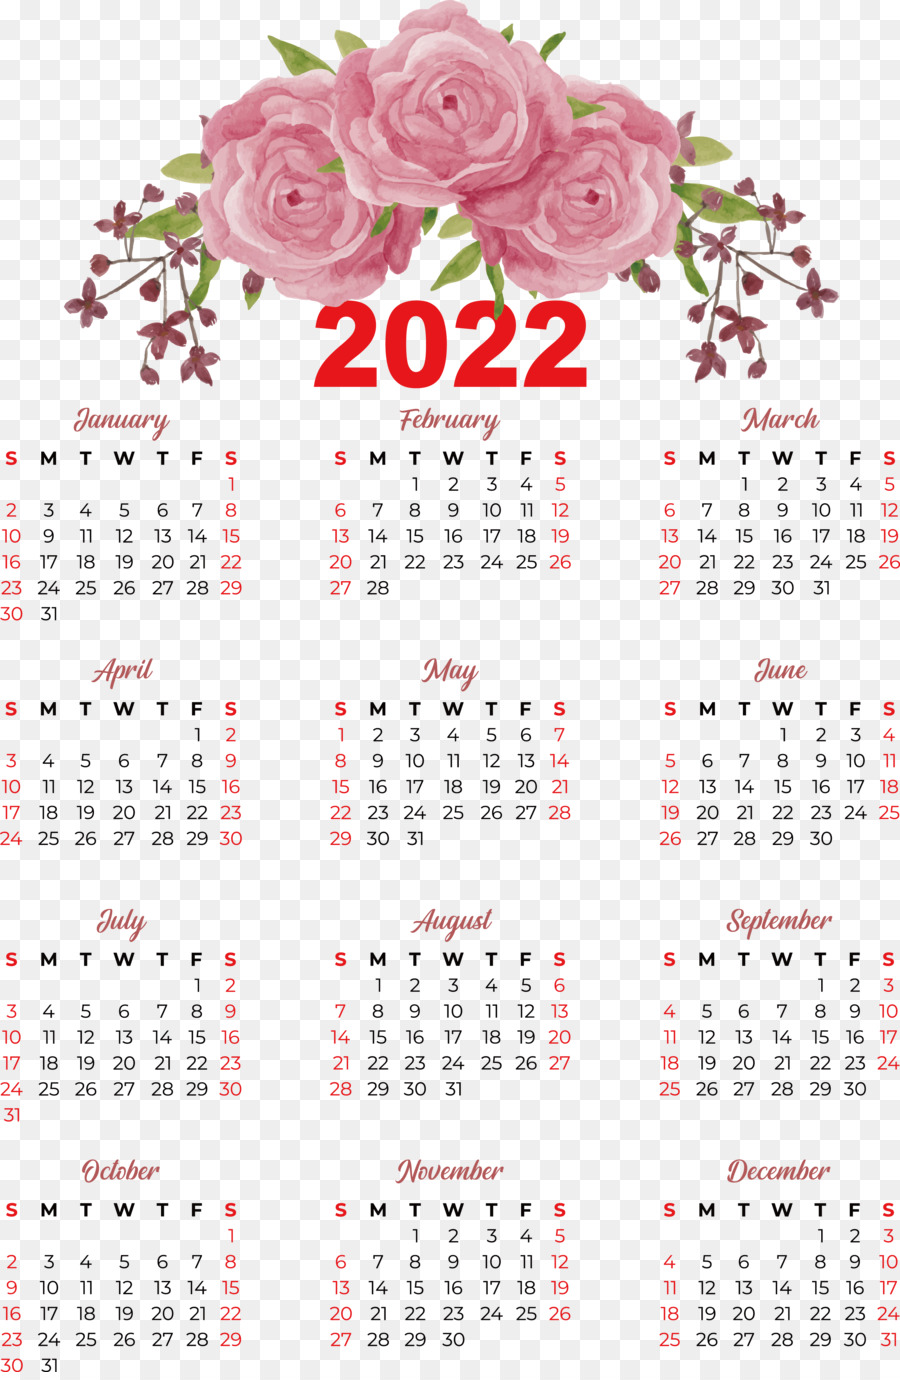 Kalender 2022 Namen der Wochentage Julian Calendar Monate - 